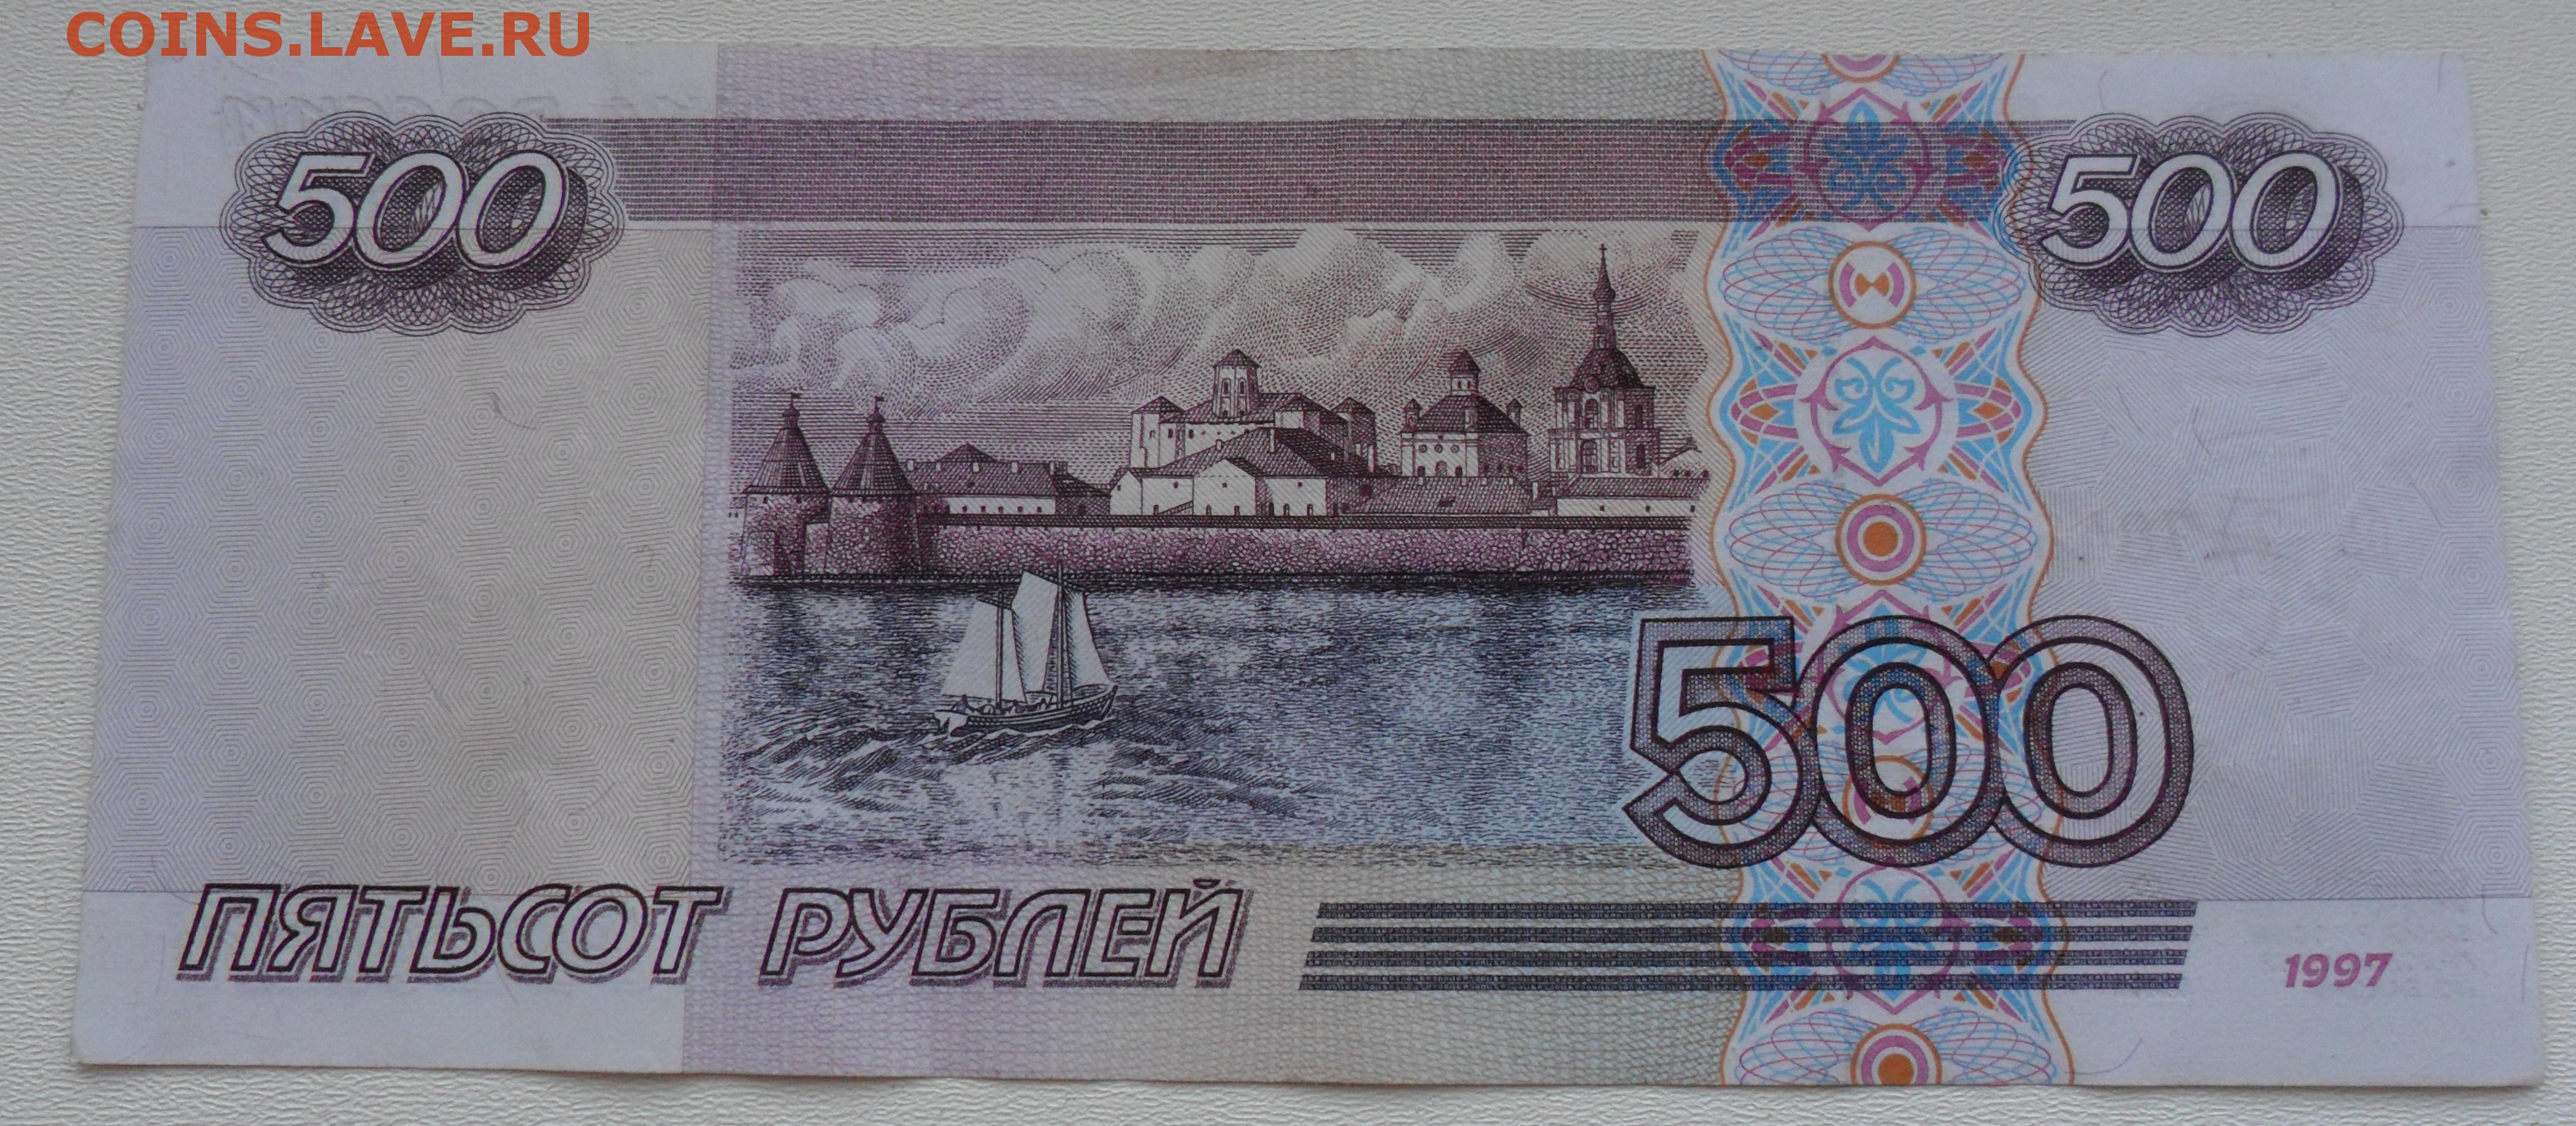 500 рублей бабушке. 500 Рублей 1997 АА. Купюра 500 рублей. Купюра 500р. 500 Рублей 1997 года.